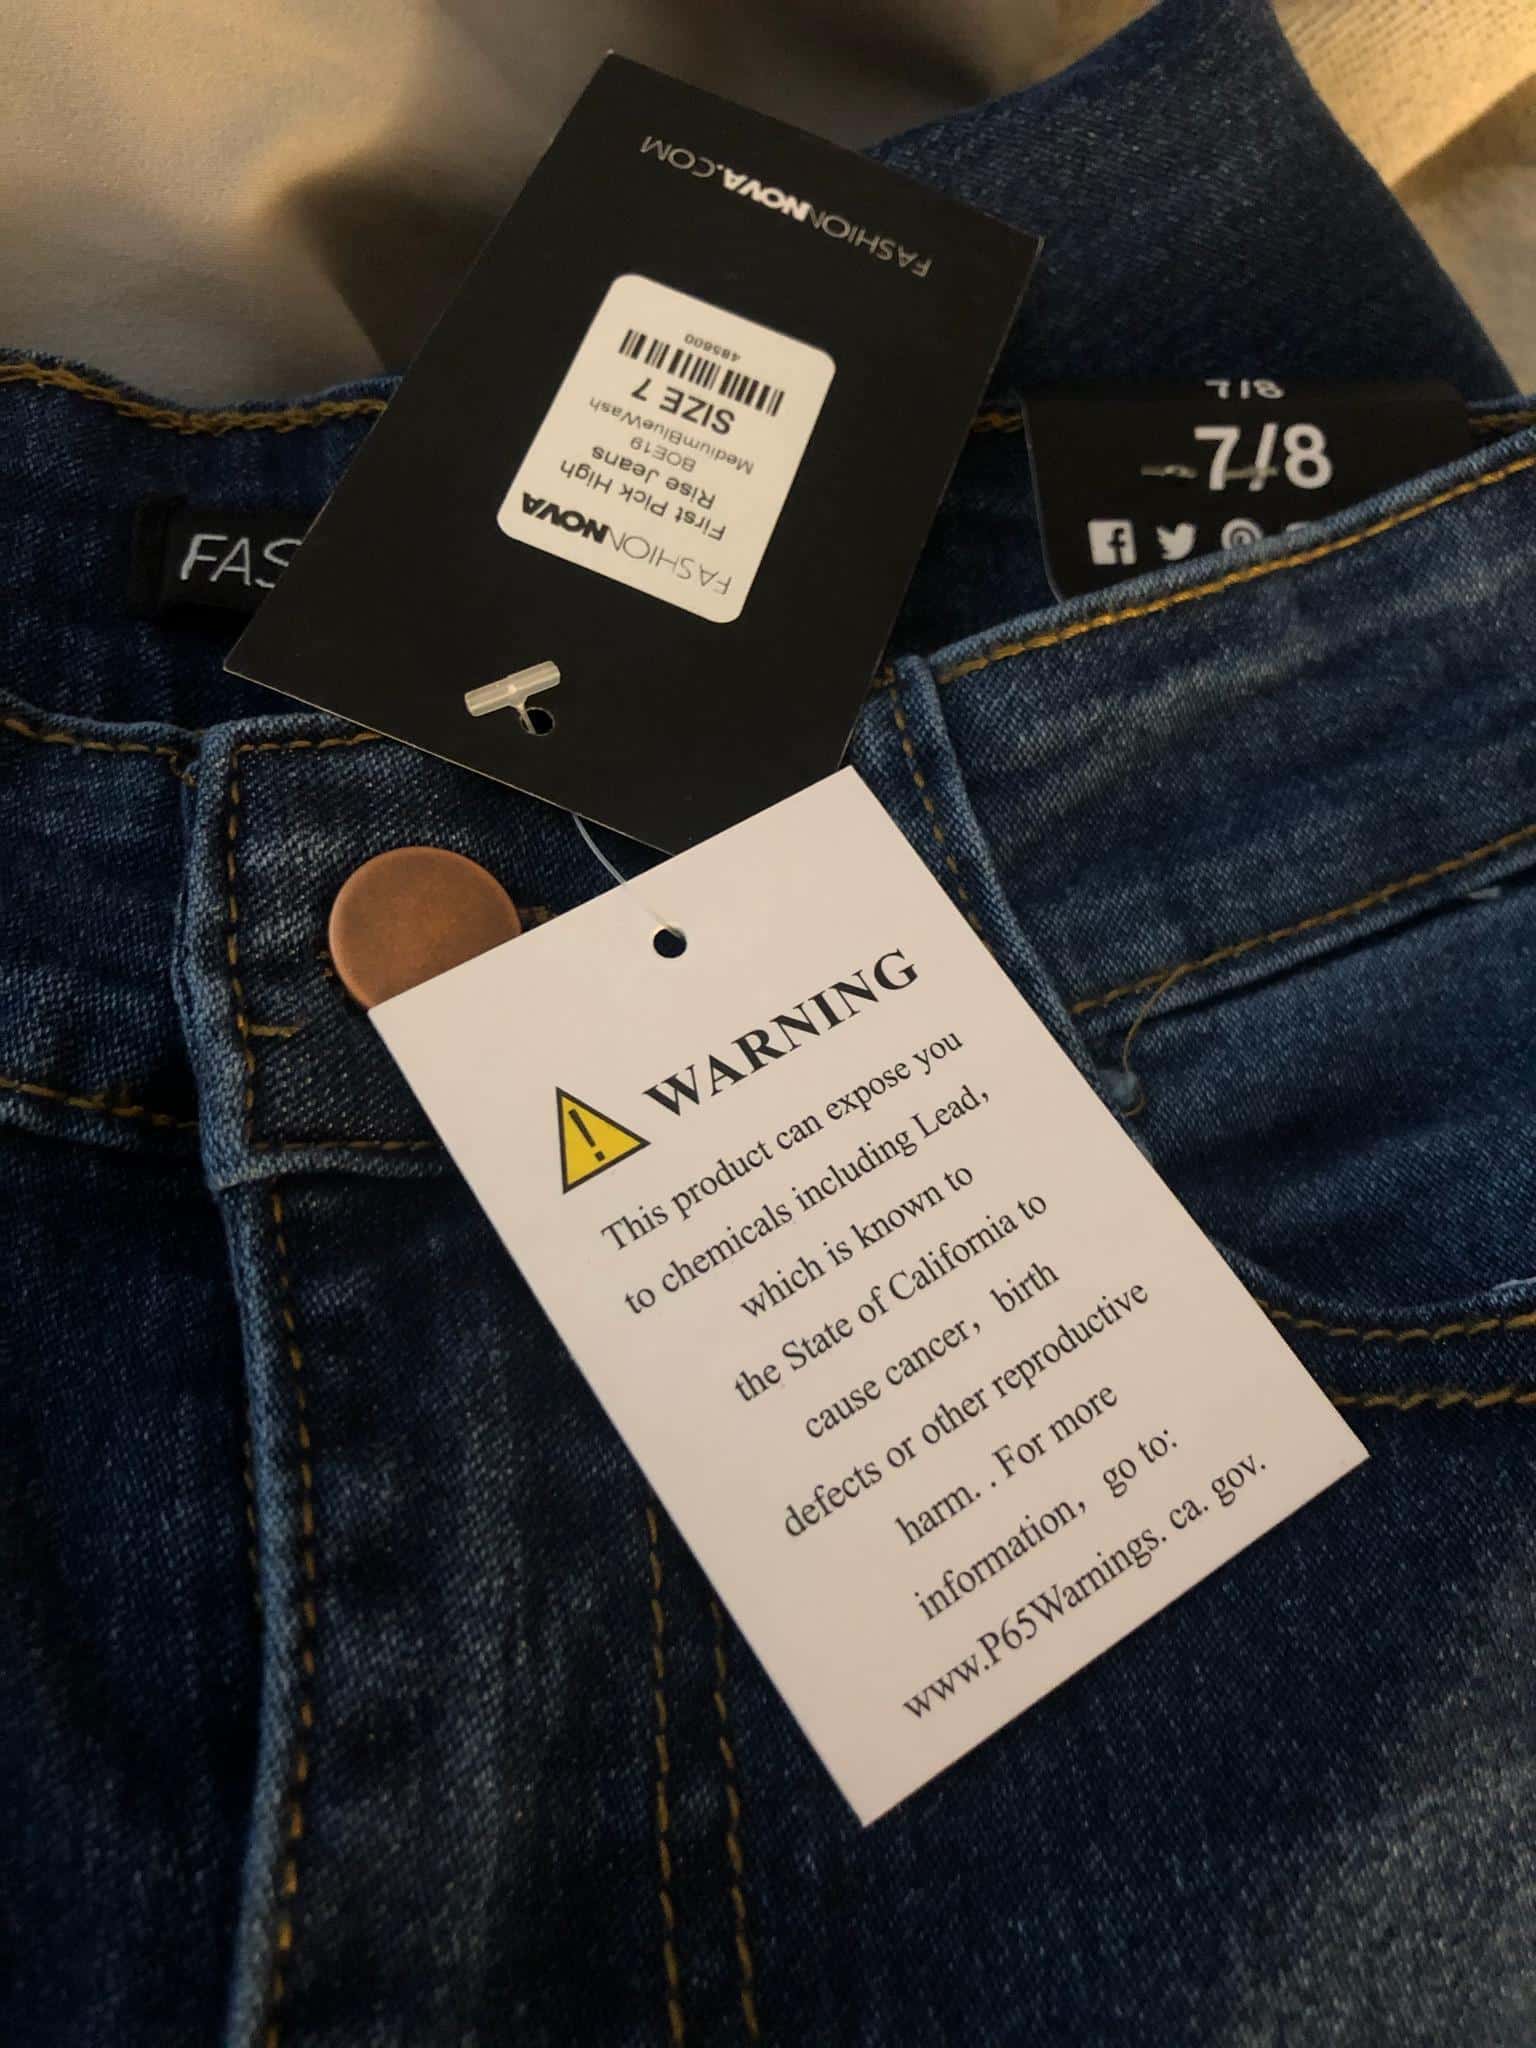 Do Jeans Cause Cancer? [Good News!]